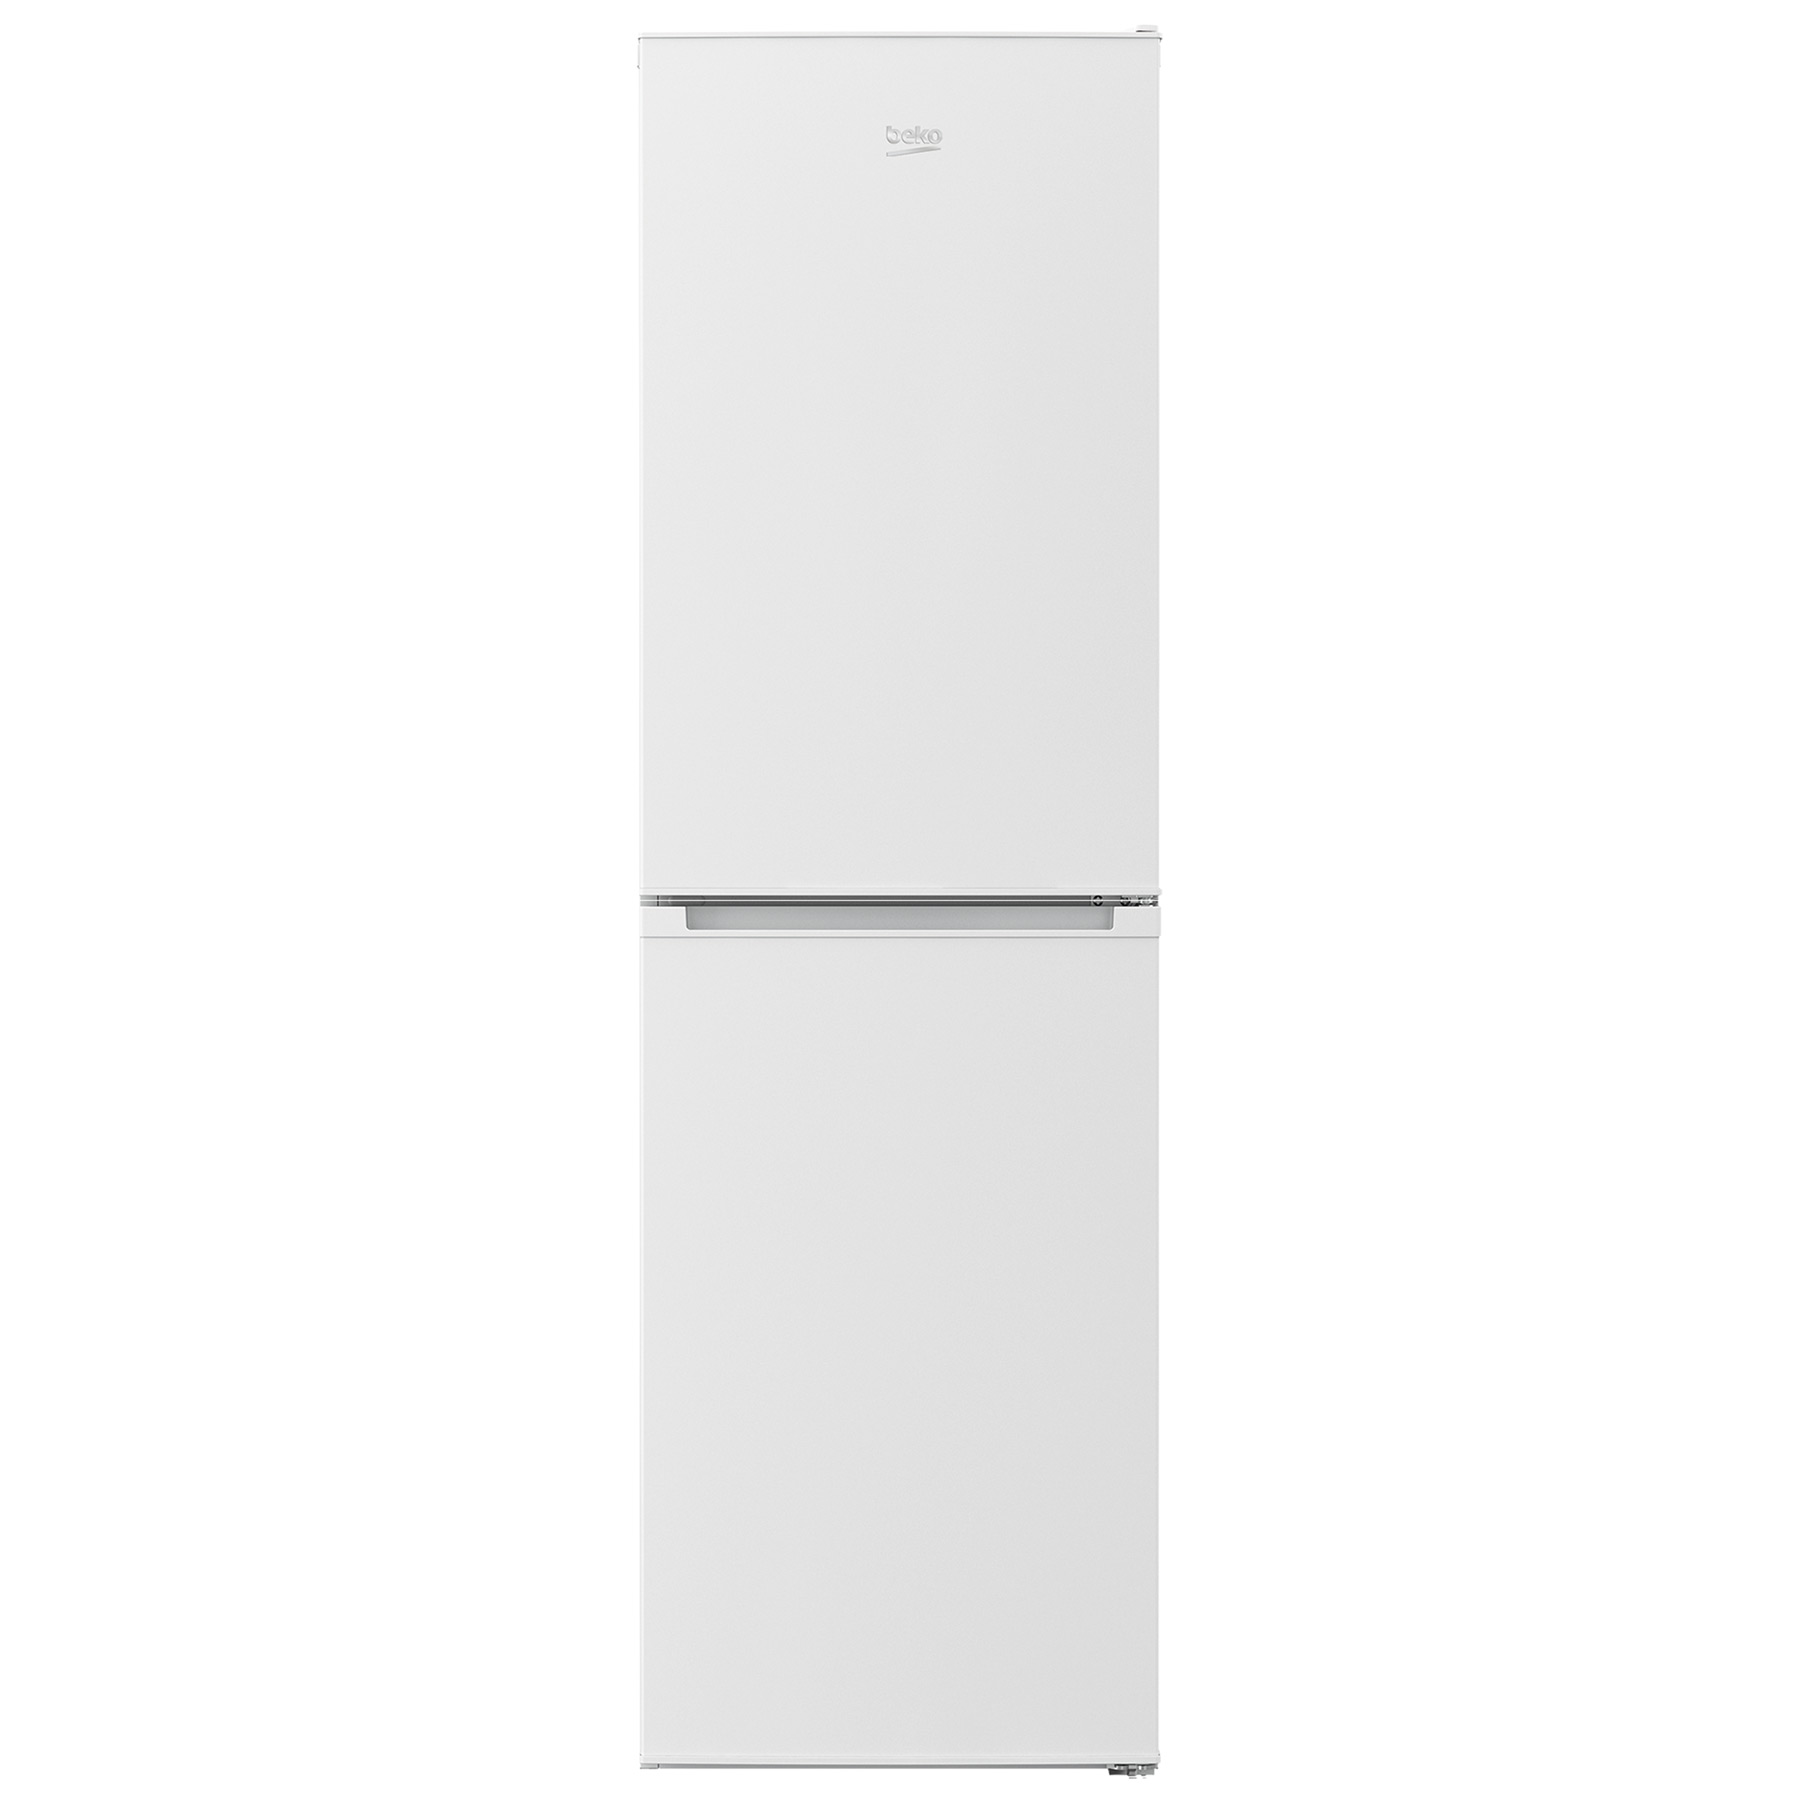 Beko CCFM3582W 54cm Frost Free Fridge Freezer in White 1 82m F Rated